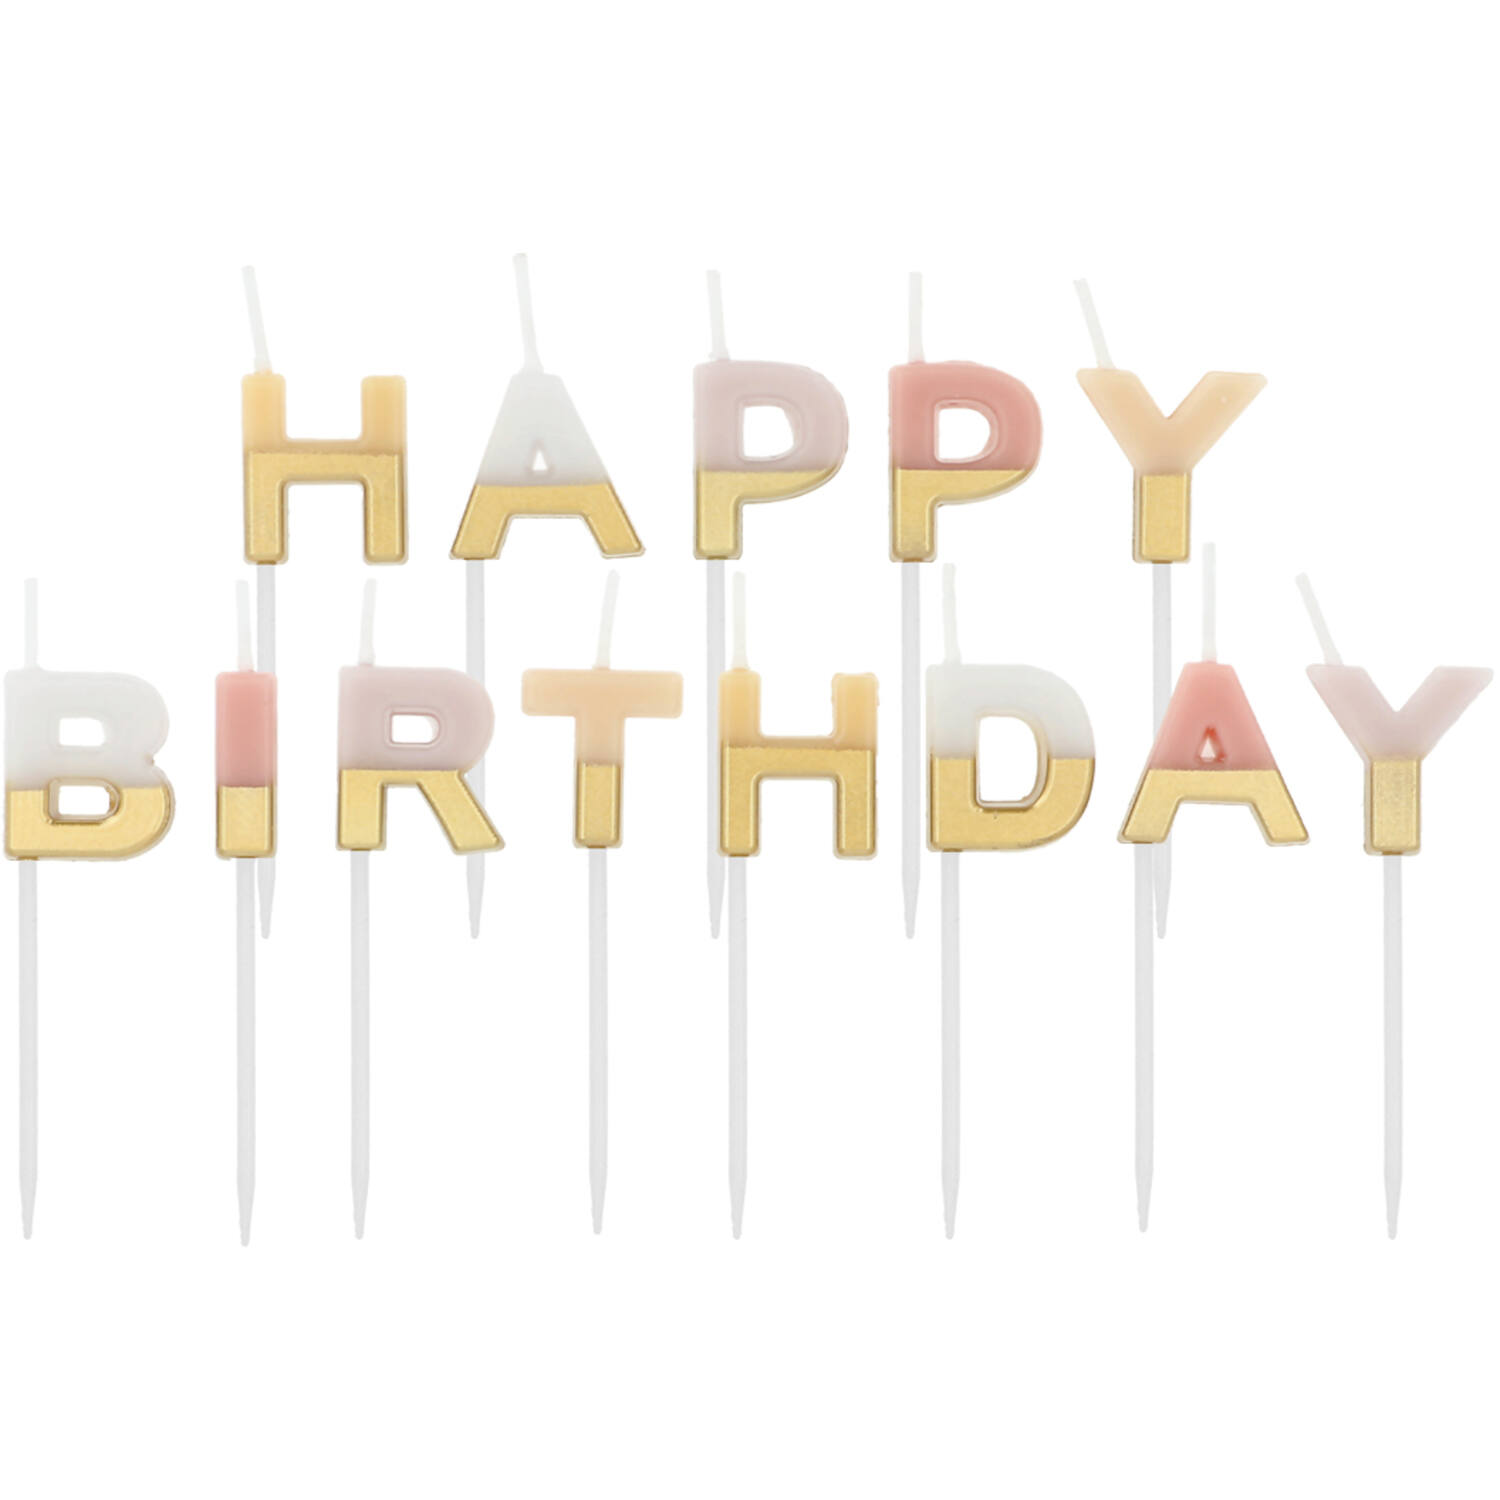 NEU Geburtstags-Kerzen-Set Happy Birthday, gold-pastell, ca. 2cm